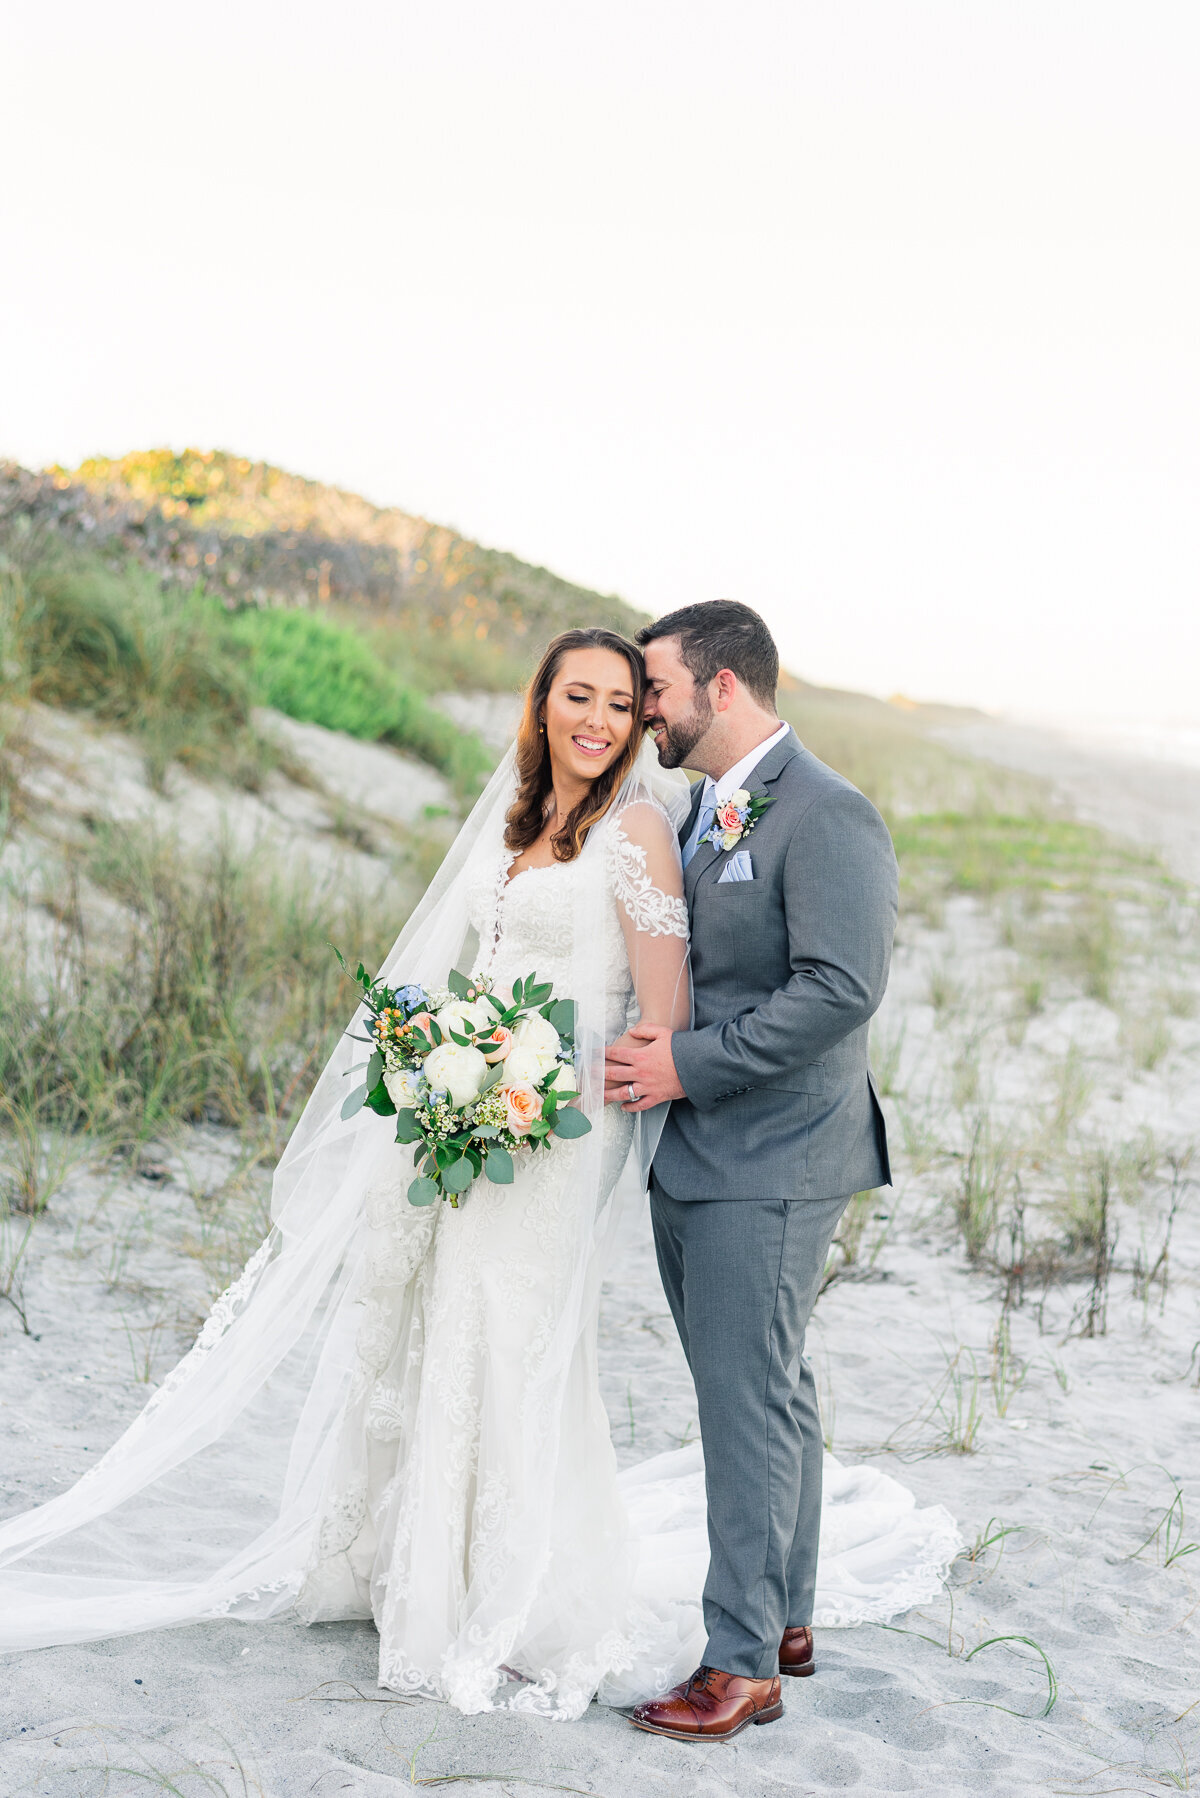 Erica & Ryan Tides Beach Wedding | Lisa Marshall Photography